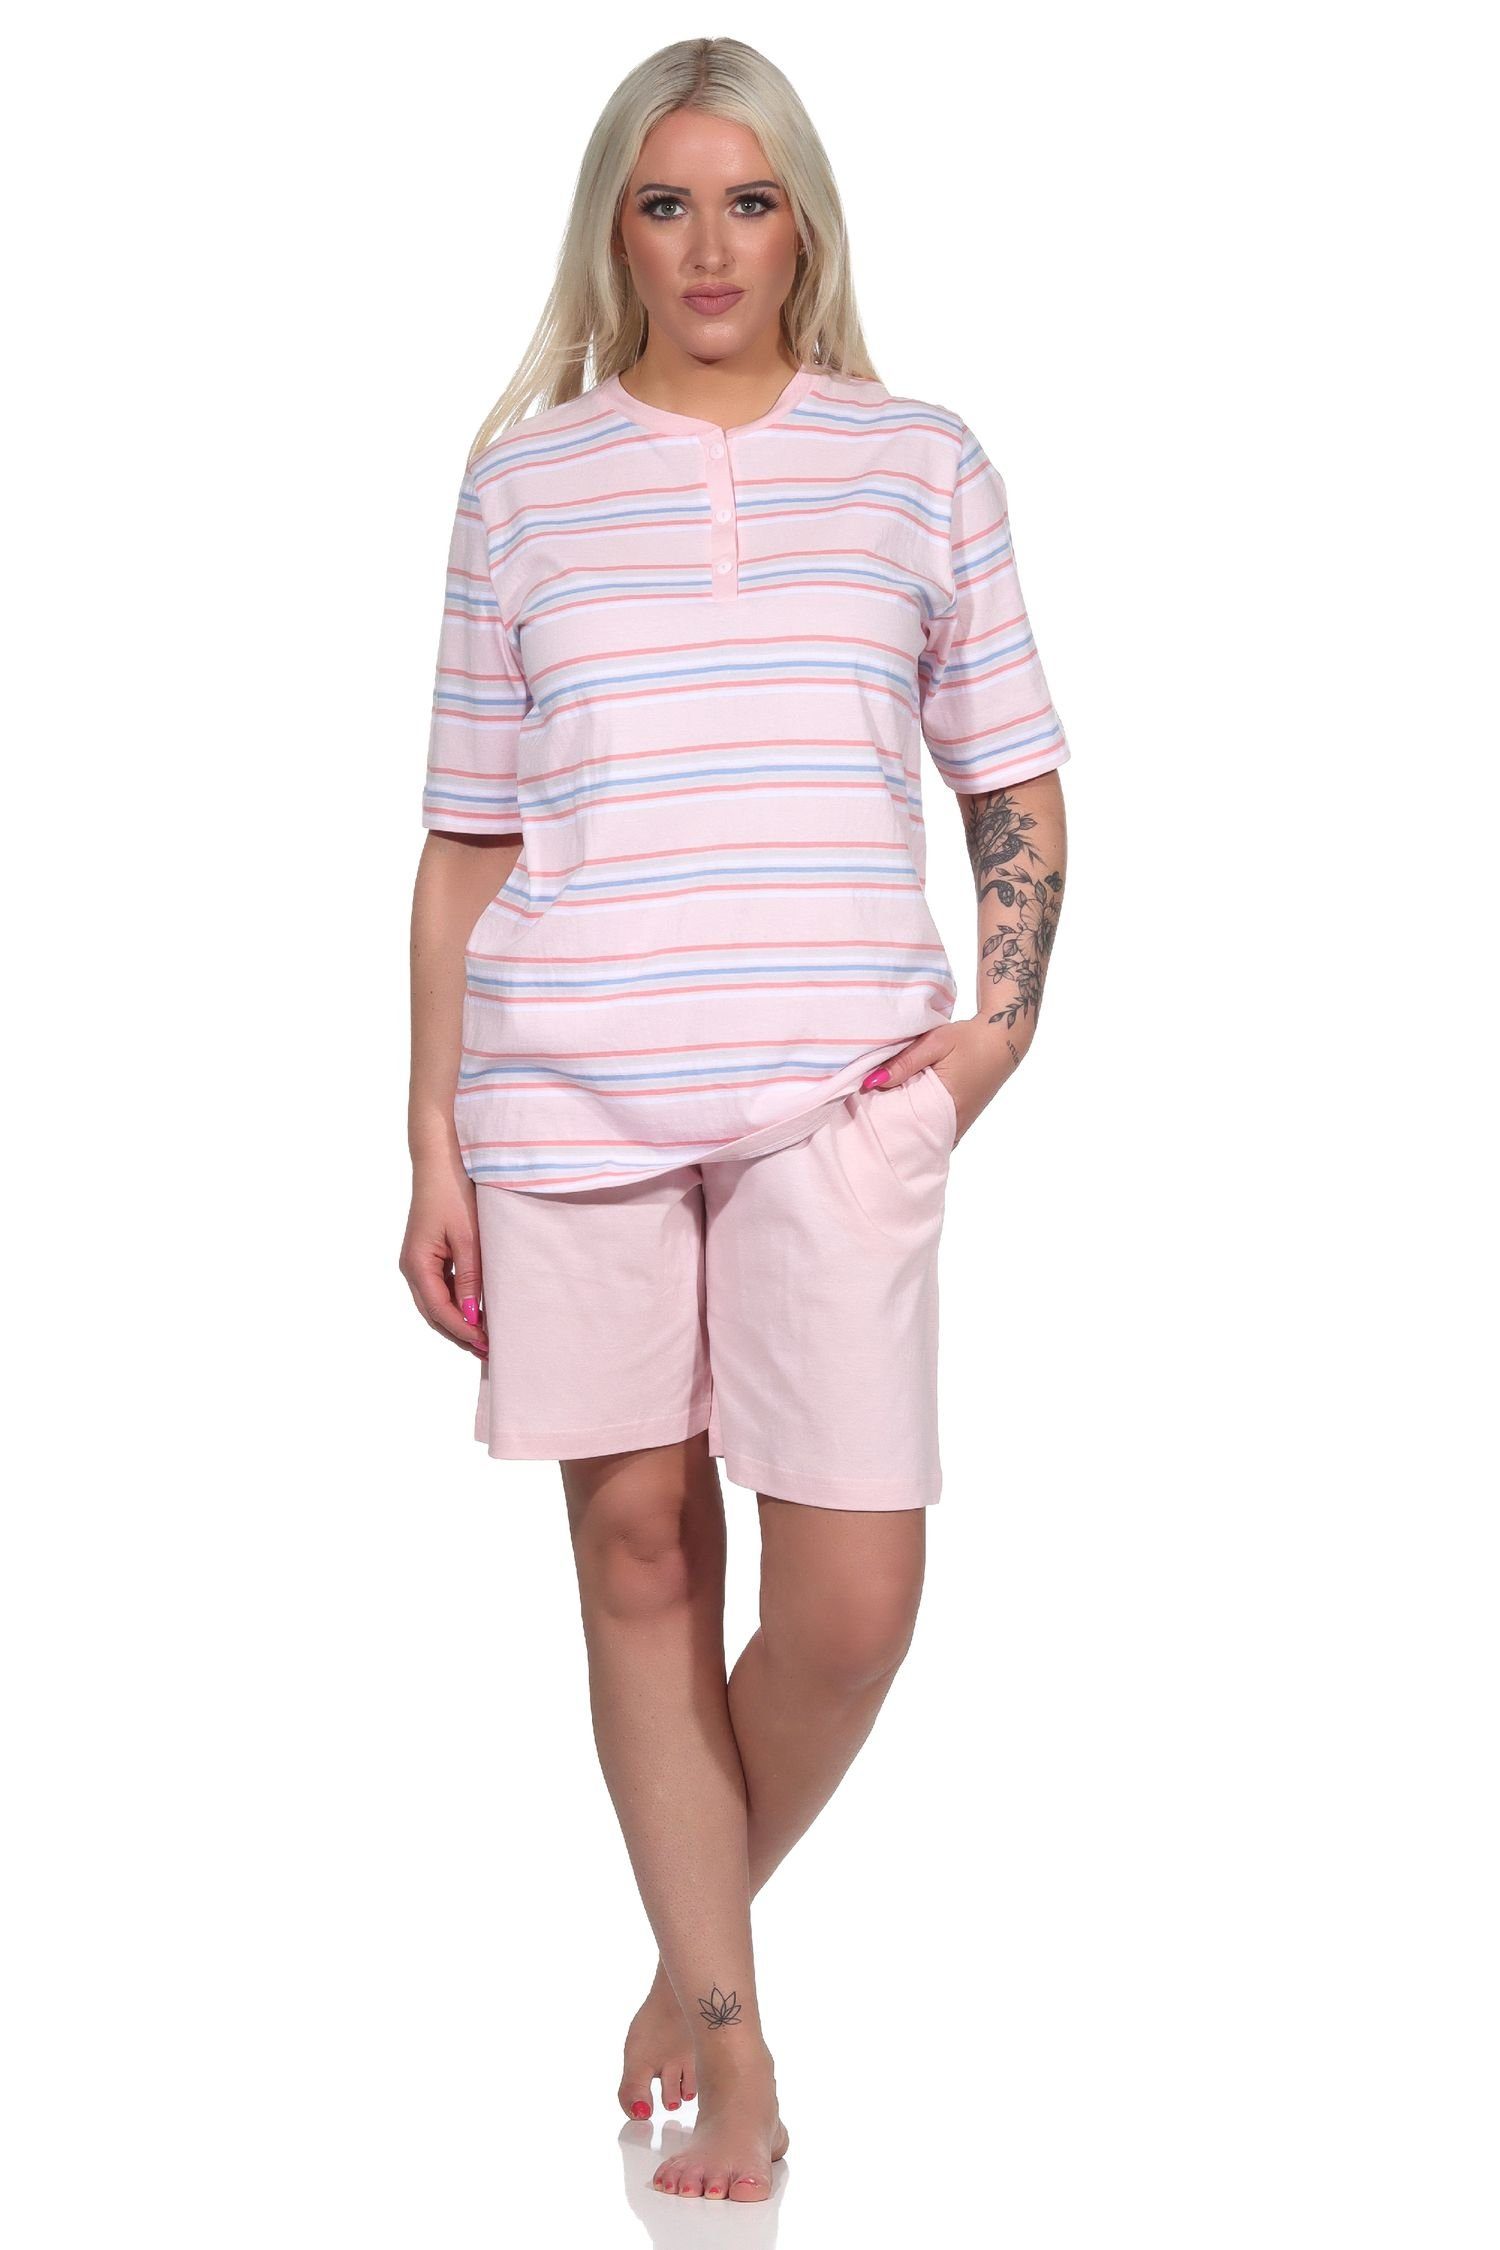 Normann Pyjama Damen Schlafanzug kurzarm Pyjama Shorty in pastellfarbenen Streifen rosa